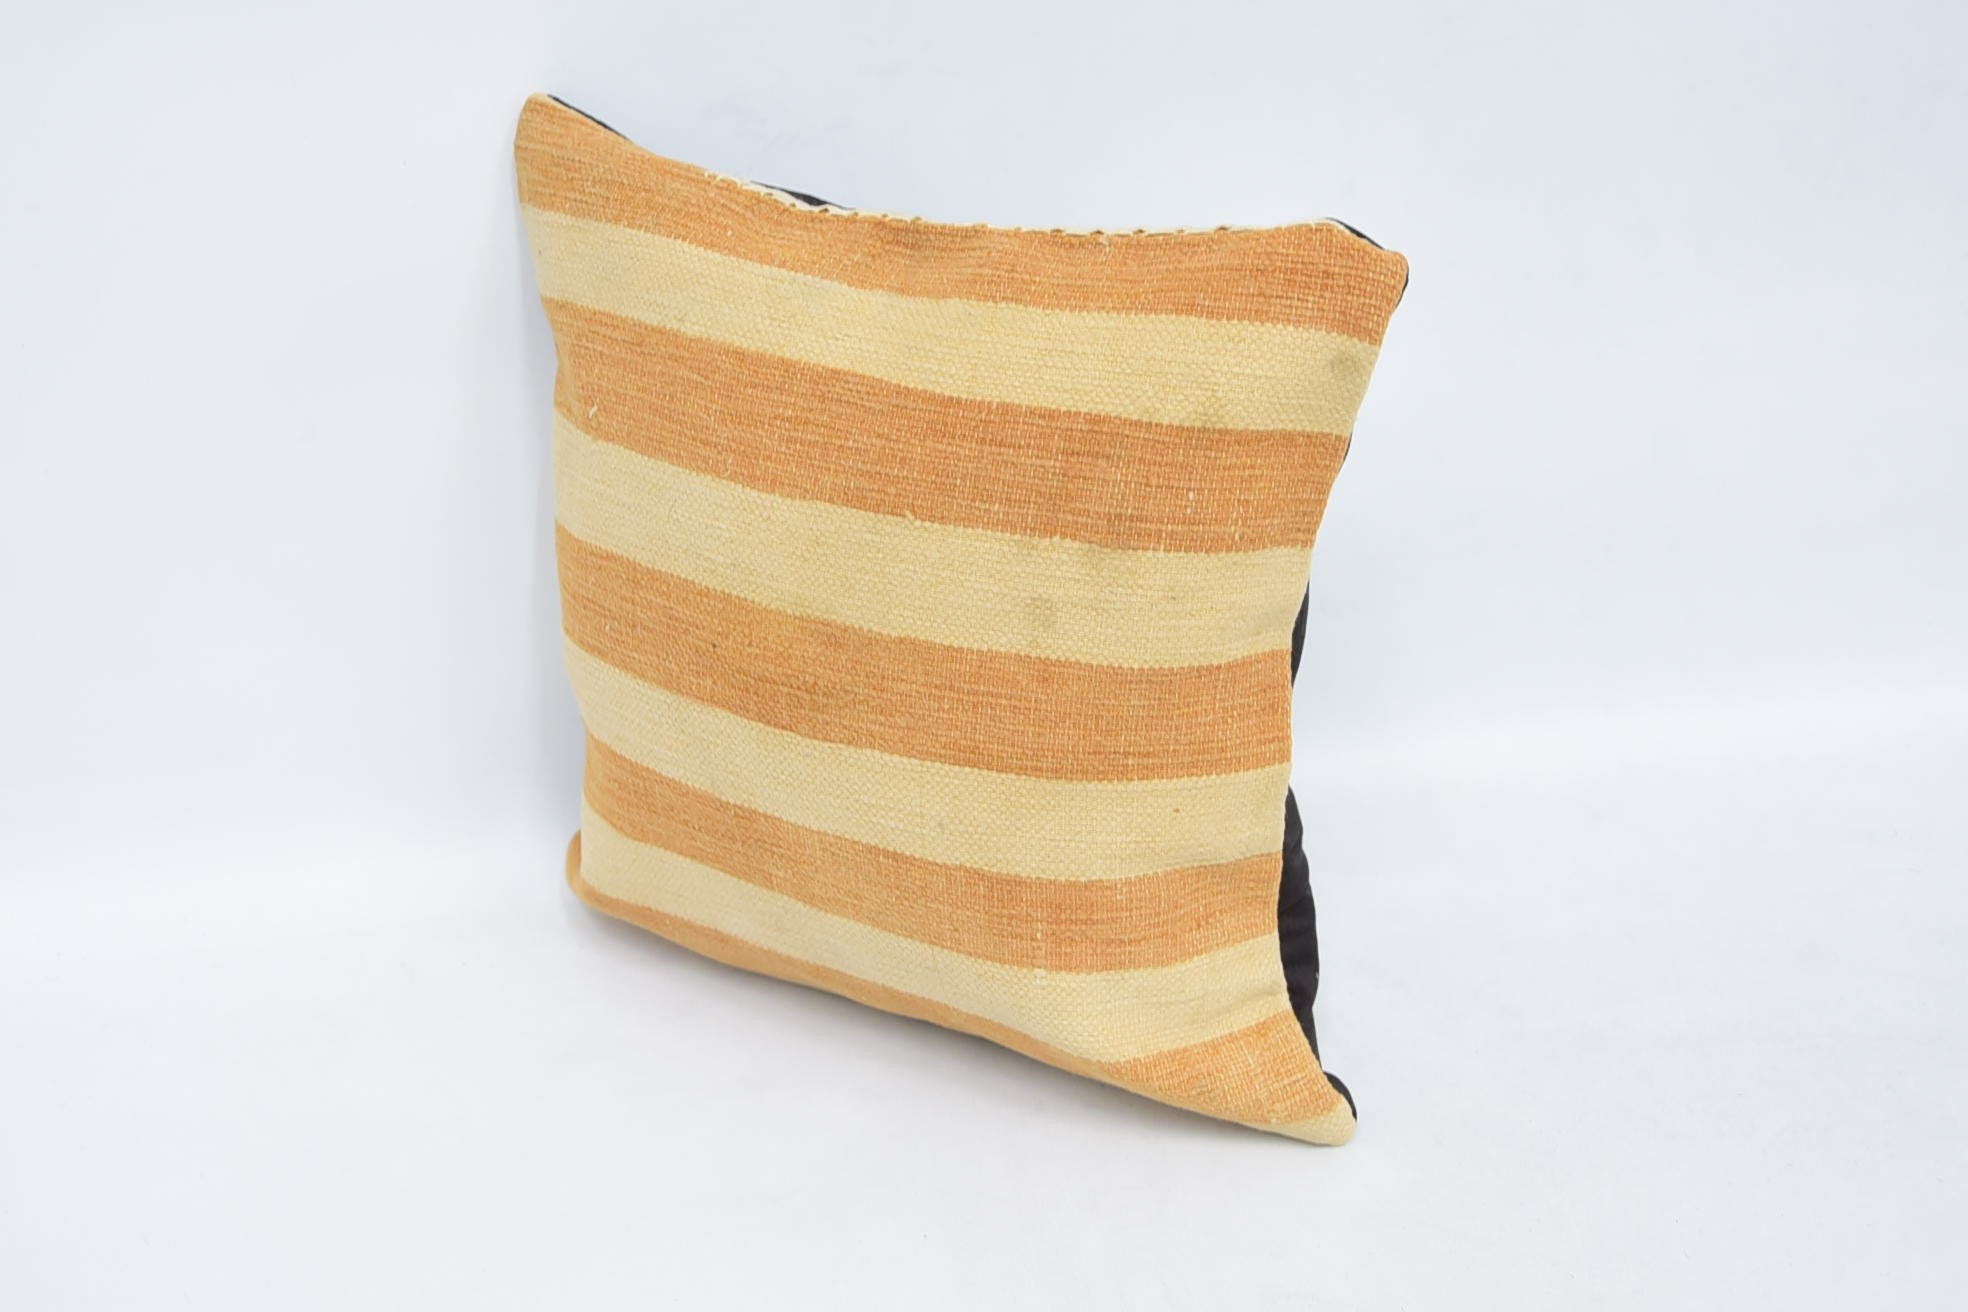 Garden Pillow, Vintage Kilim Throw Pillow, Kilim Rug Cushion, Turkish Kilim Pillow, 12"x12" Beige Cushion, Kilim Pillow Cover